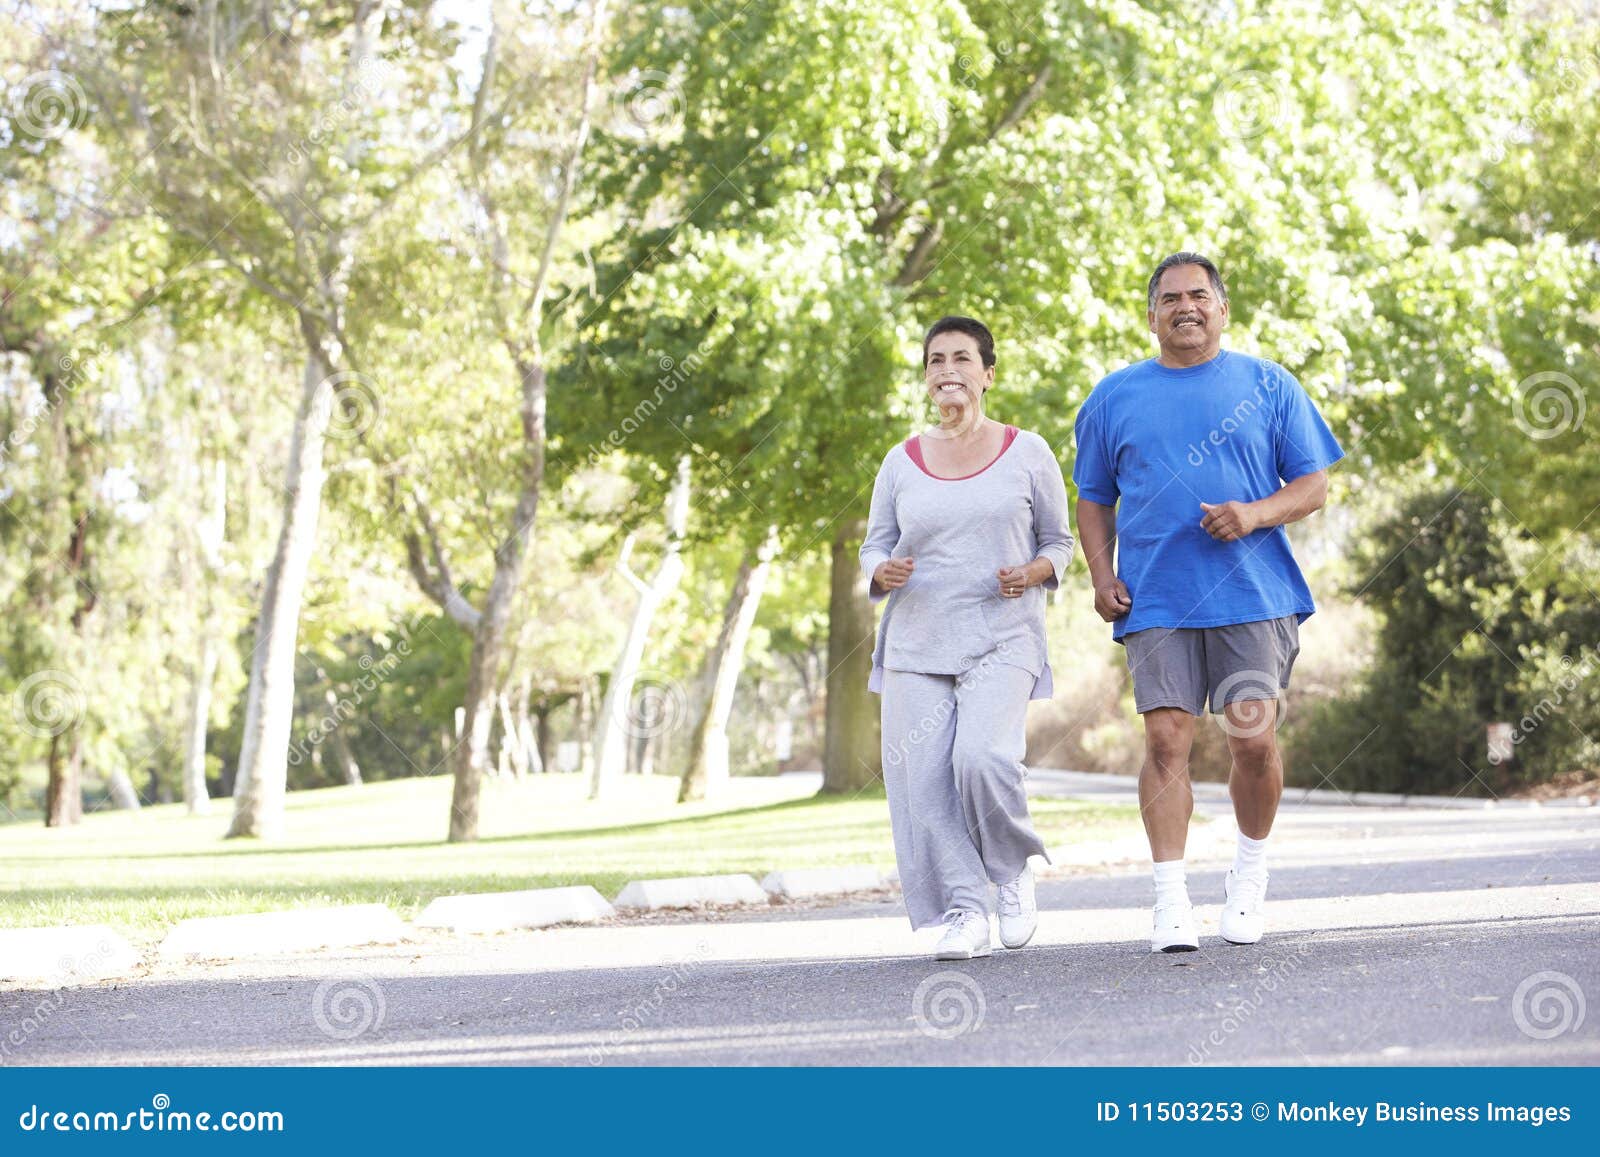 senior hispanic couple jogging in park